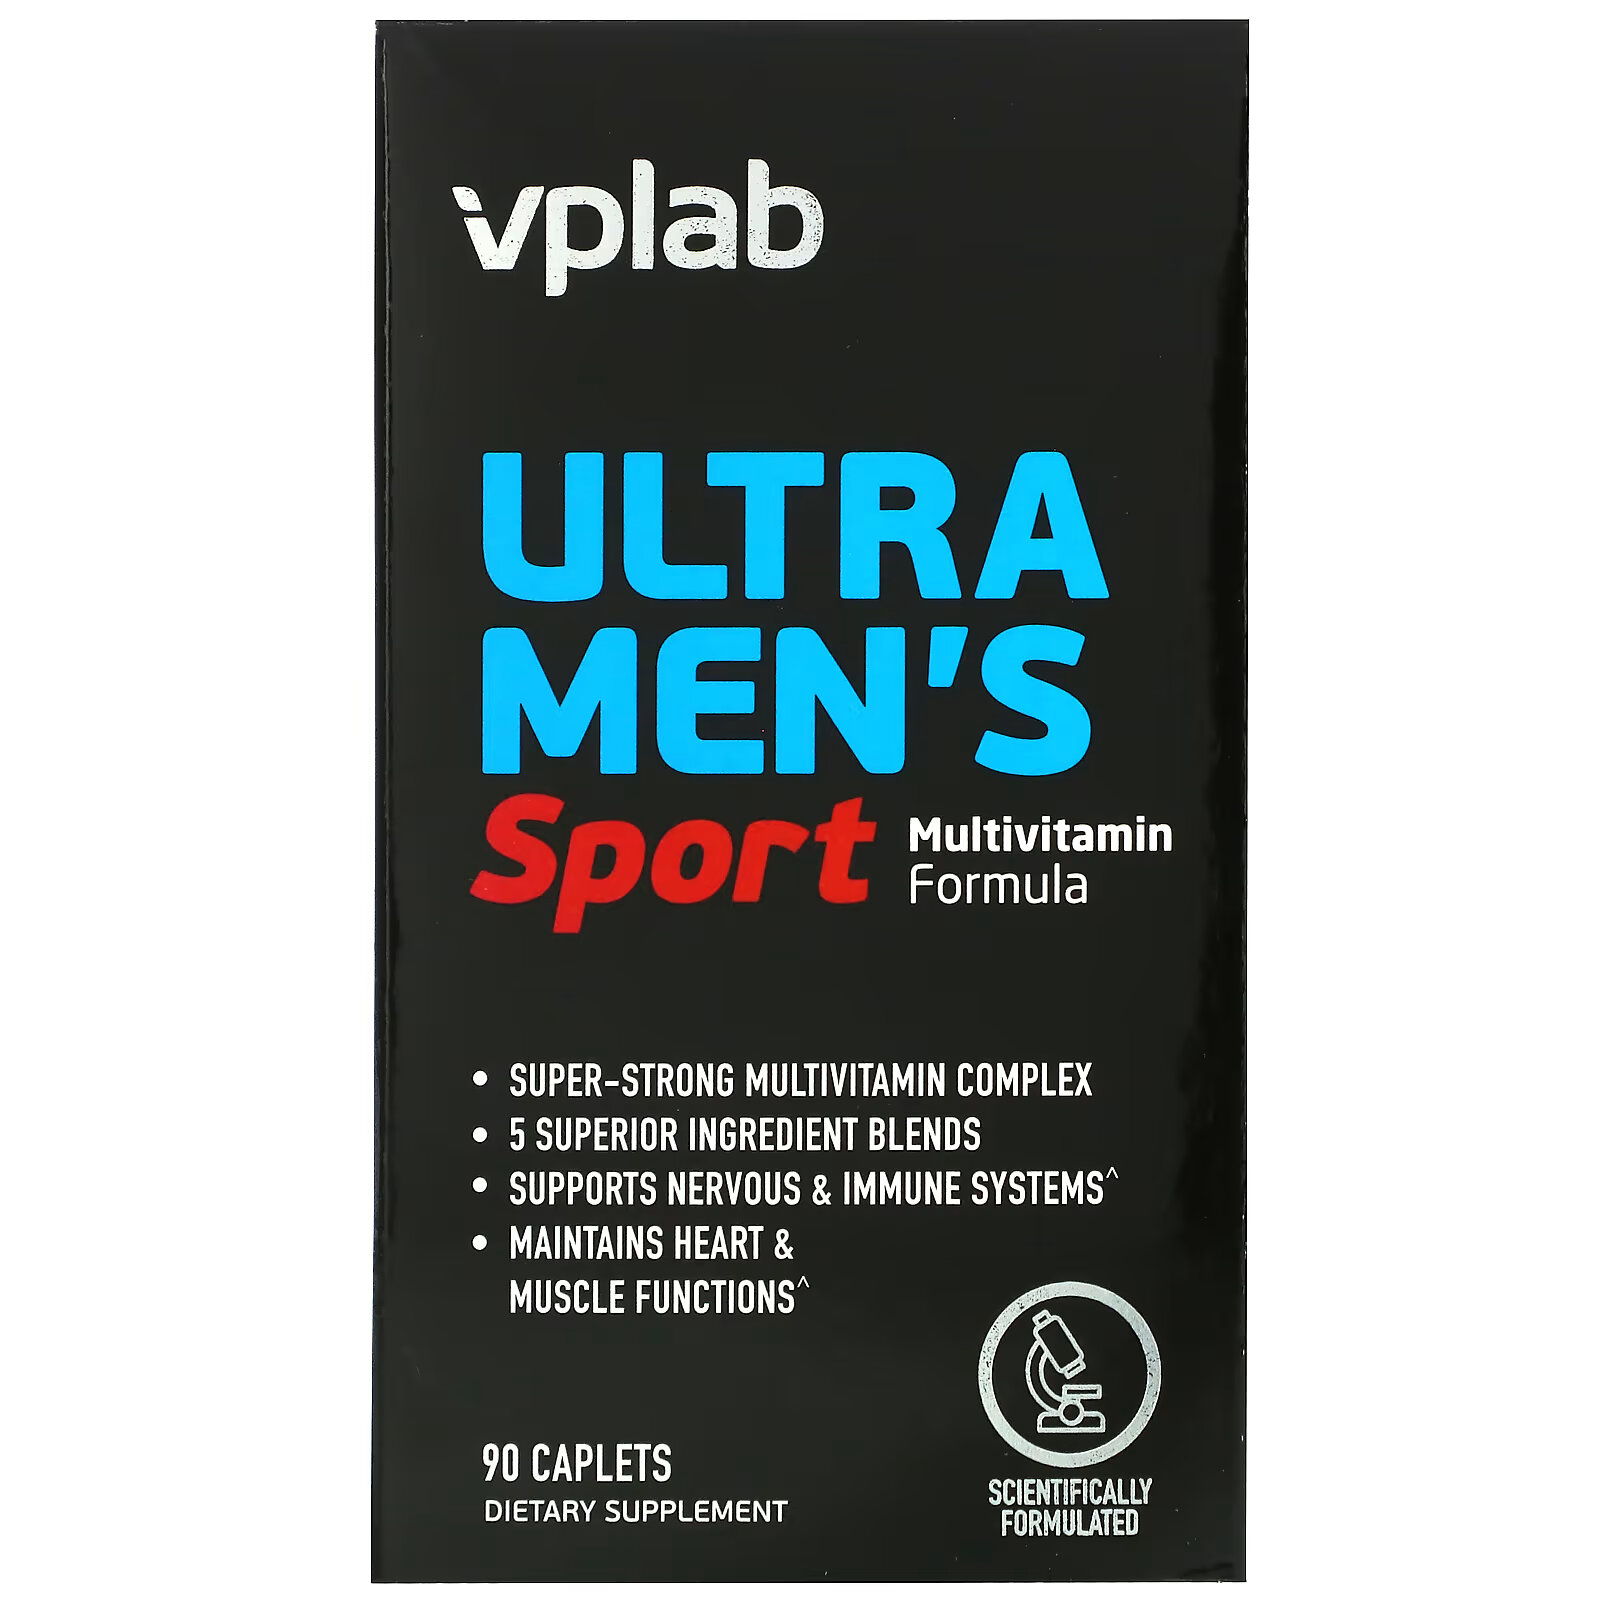 Vplab, Ultra Men’s, мультивитамины для мужчин для физической активности, 90 капсул vplab мультивитаминный комплекс для мужчин multivitamin formula 90 таблеток vplab ultra men s